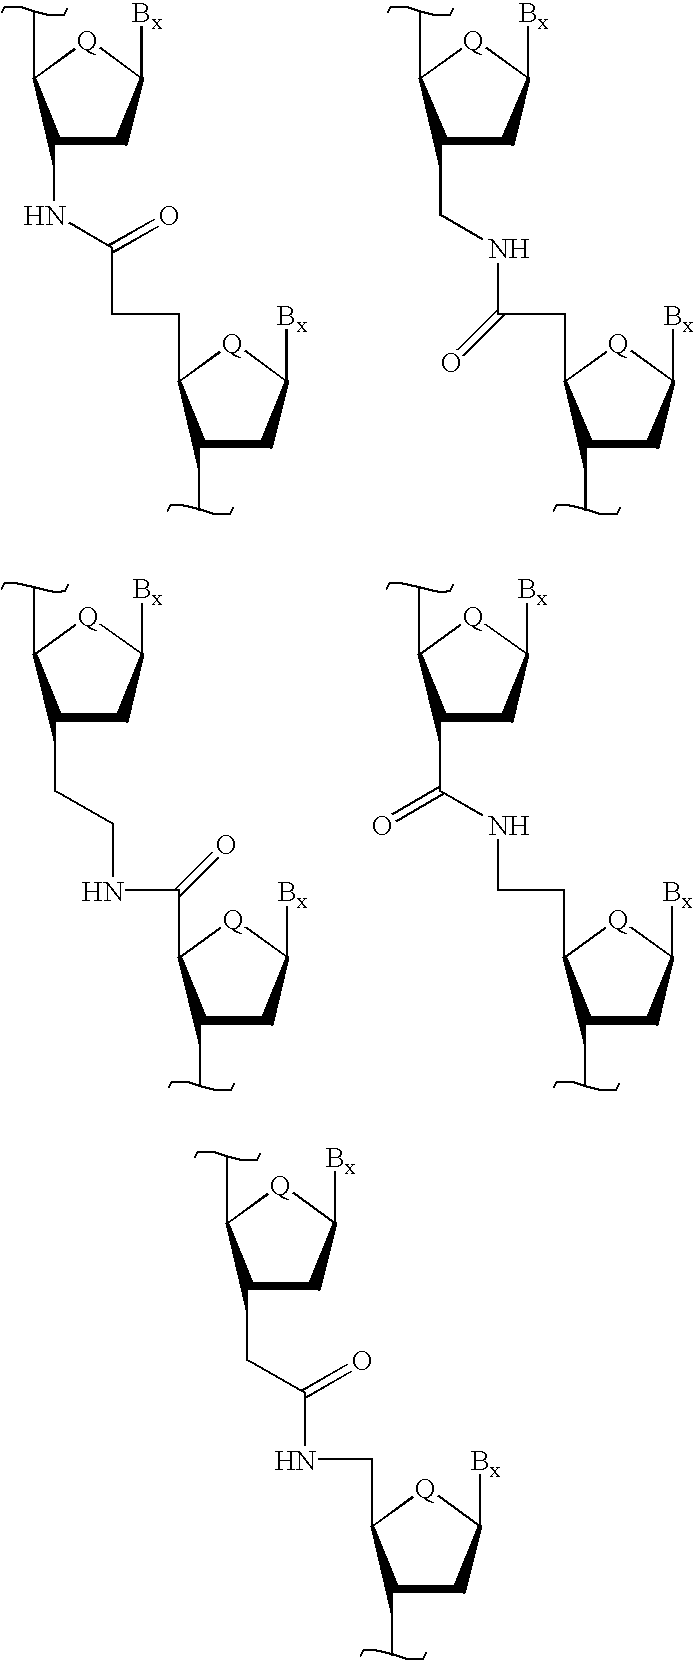 Backbone-modified oligonucleotide analogs and methods for using same